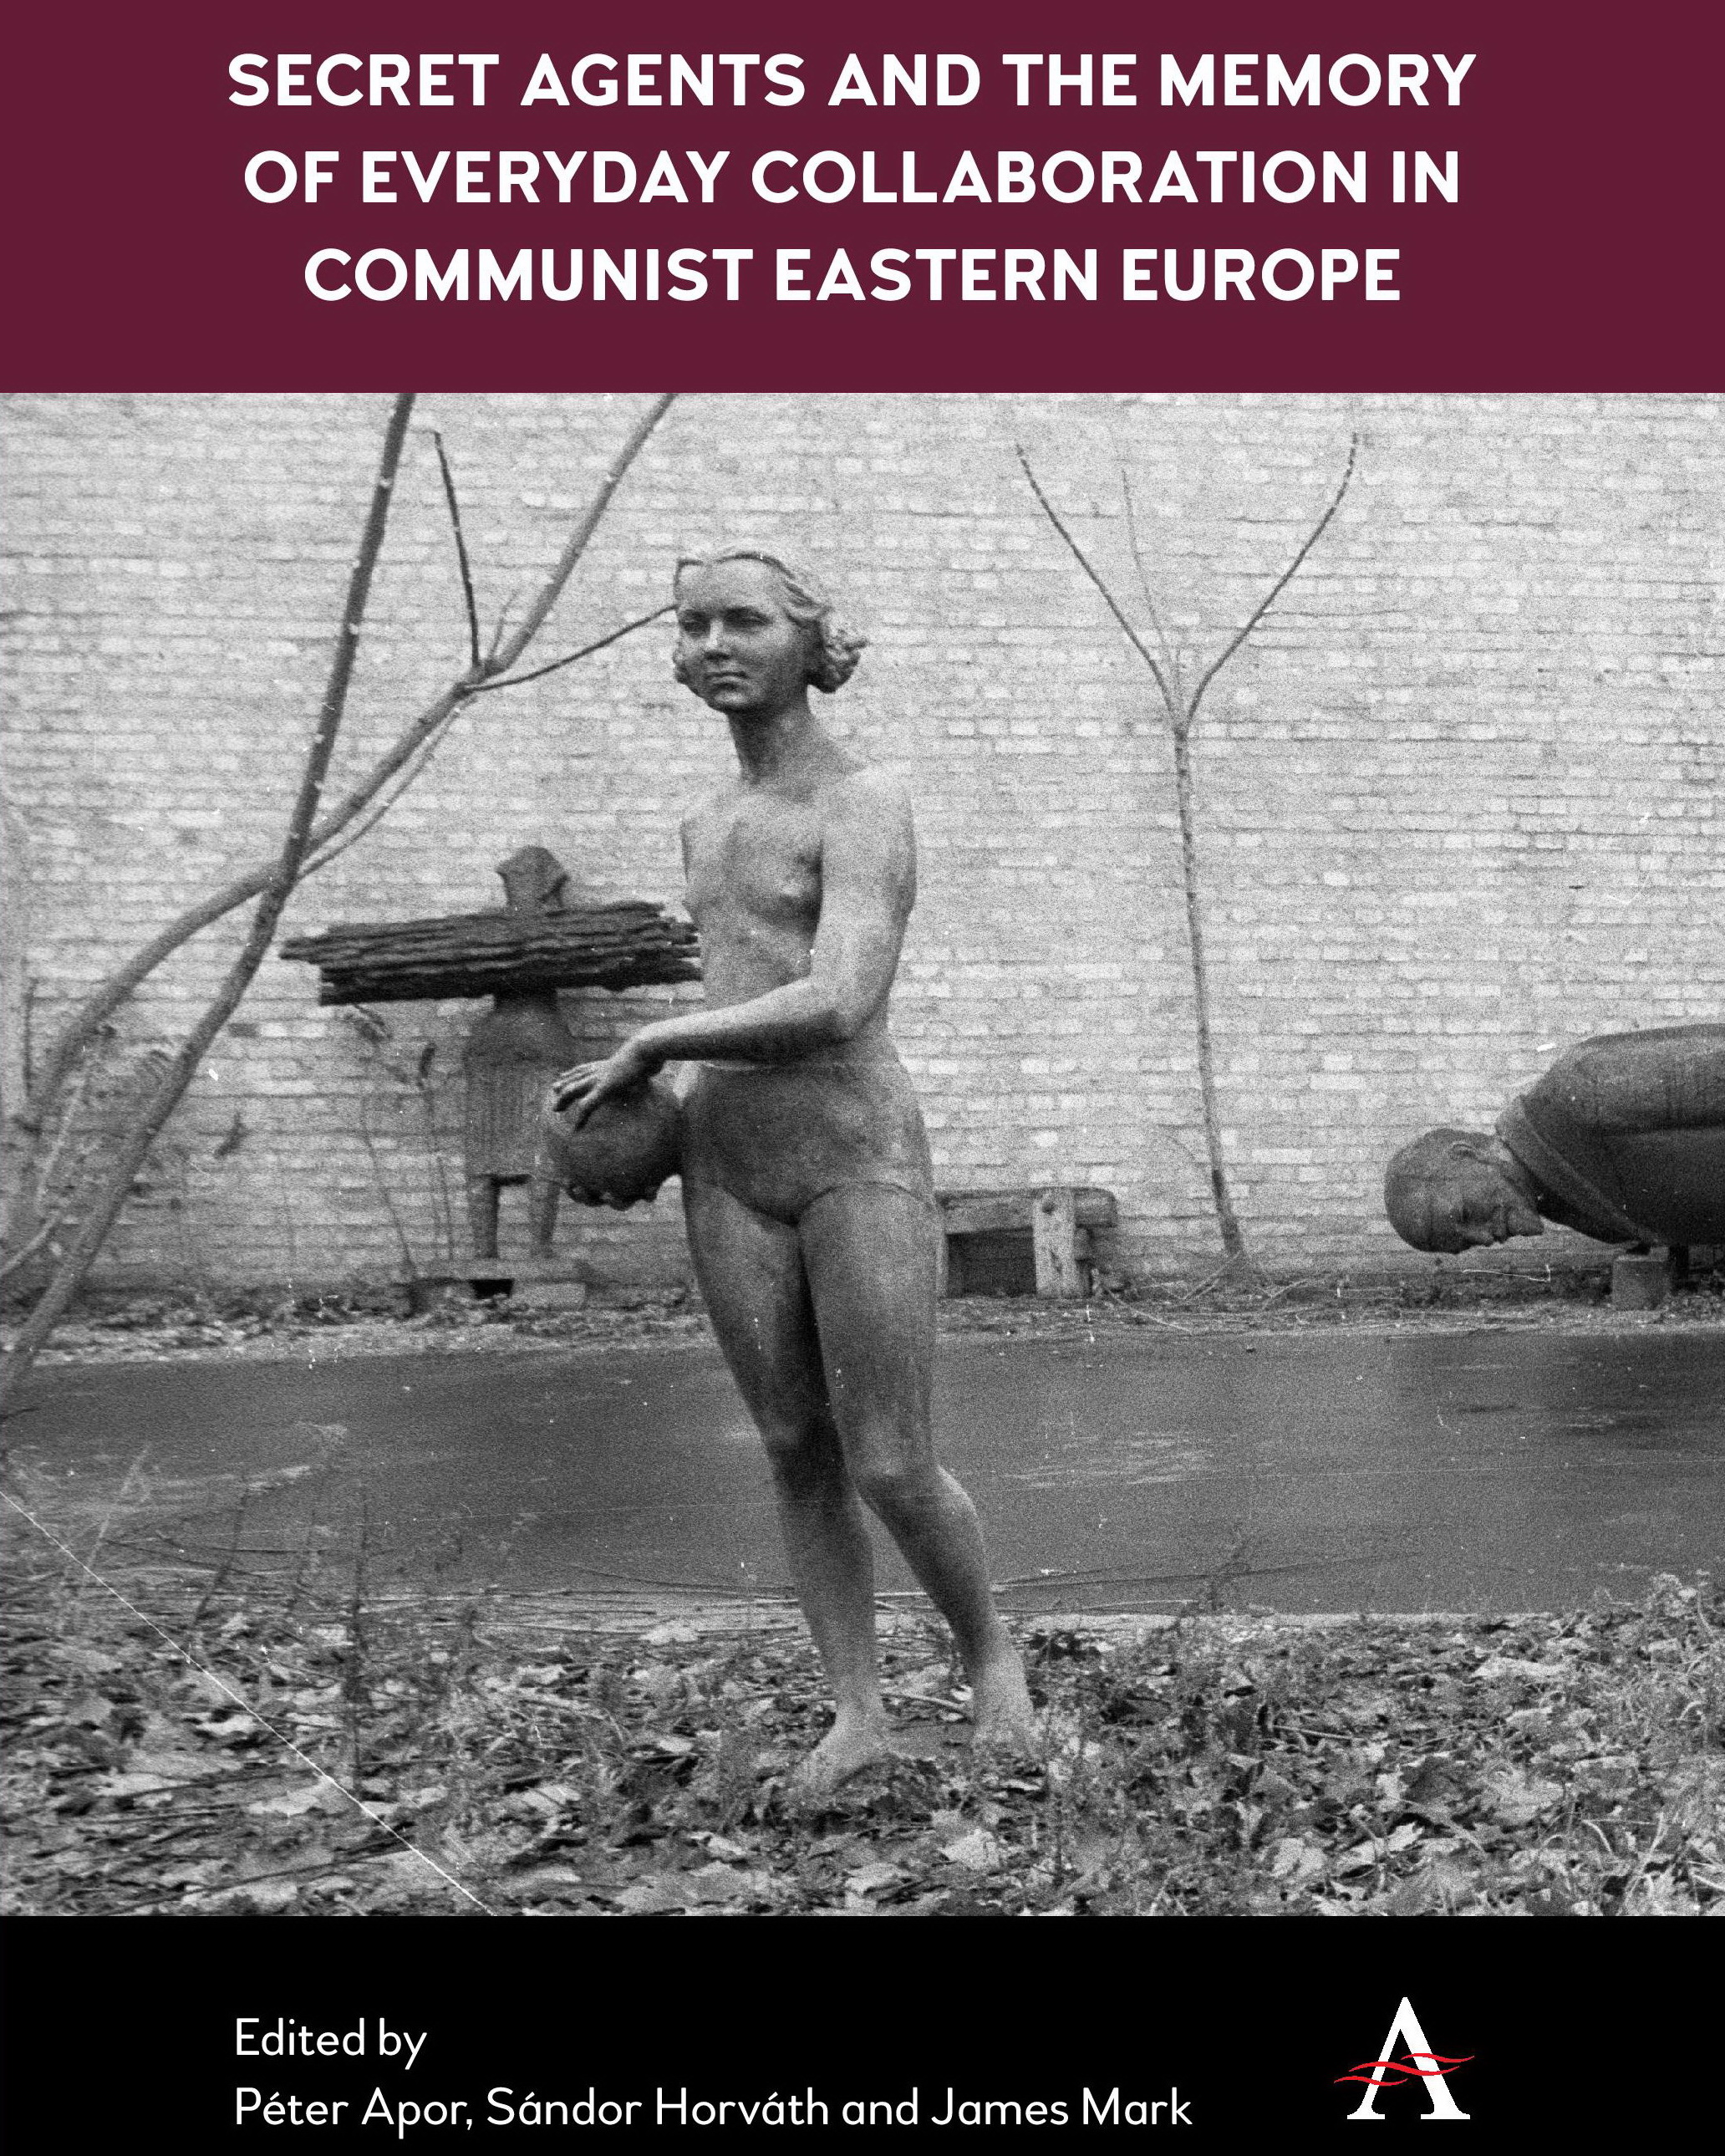 New book publication on Communist Eastern Europe, edited by Péter Apor and Sándor Horváth